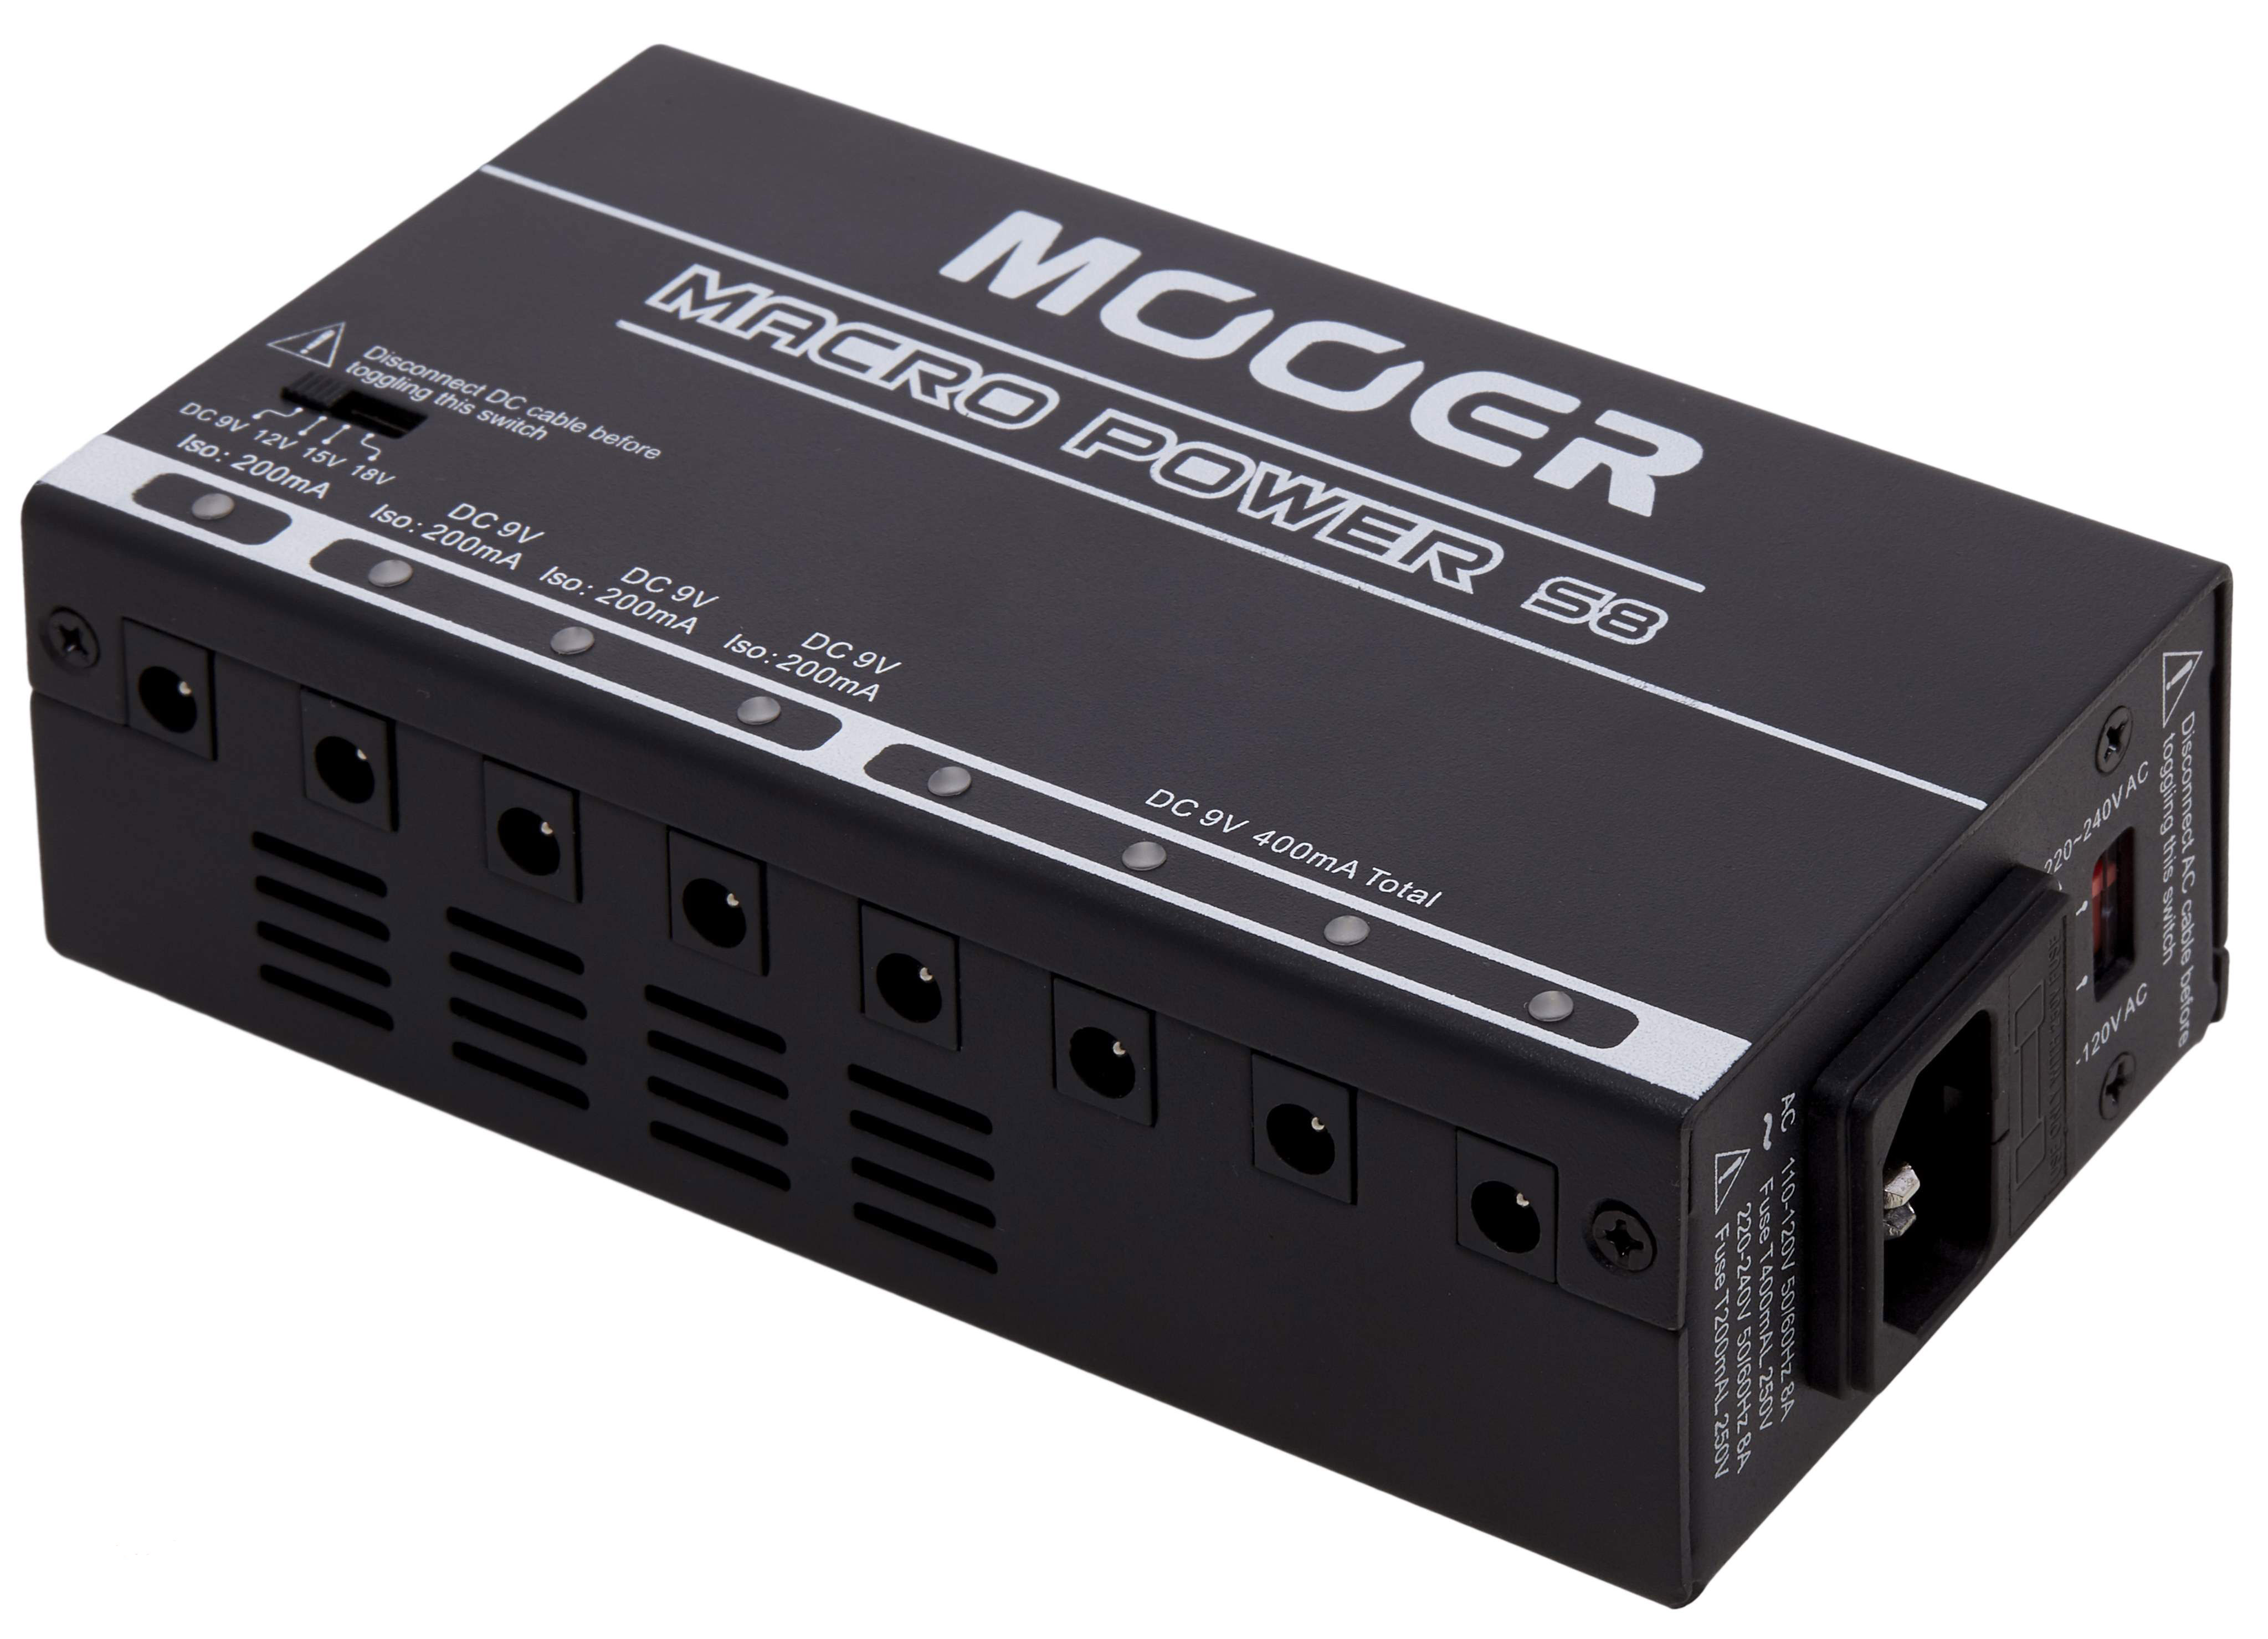 Mooer Macro Power S8 по цене 6 990 ₽